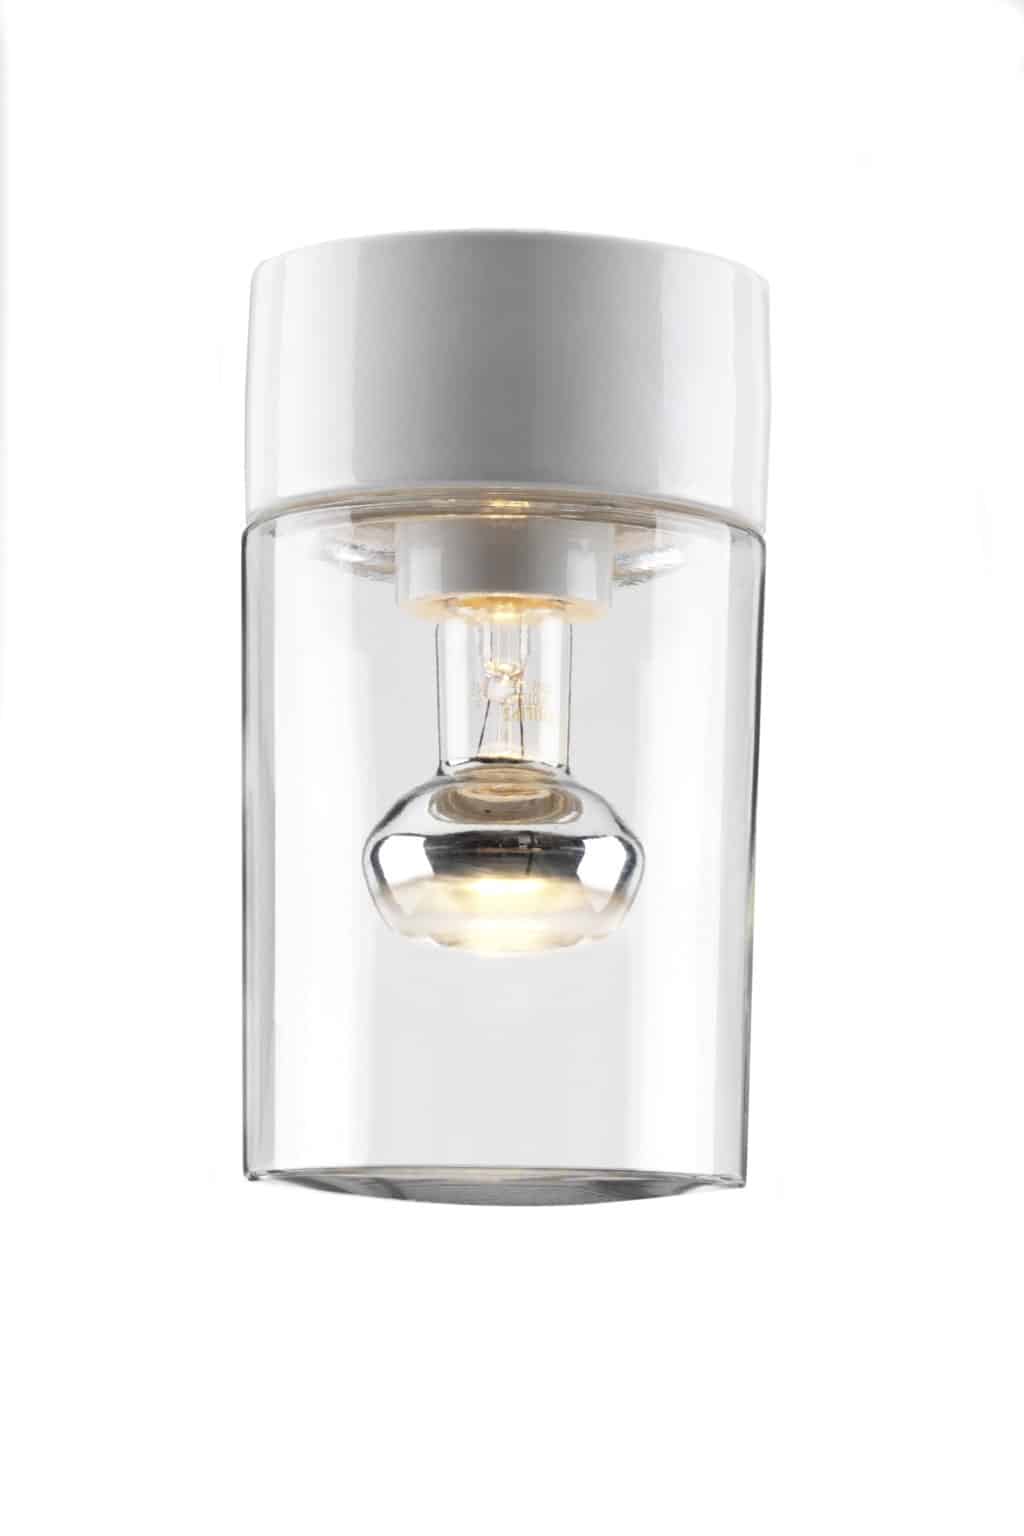 Buitenlamp Opus ifo electric wit opus 120/200 porselein tuinextra helder glas